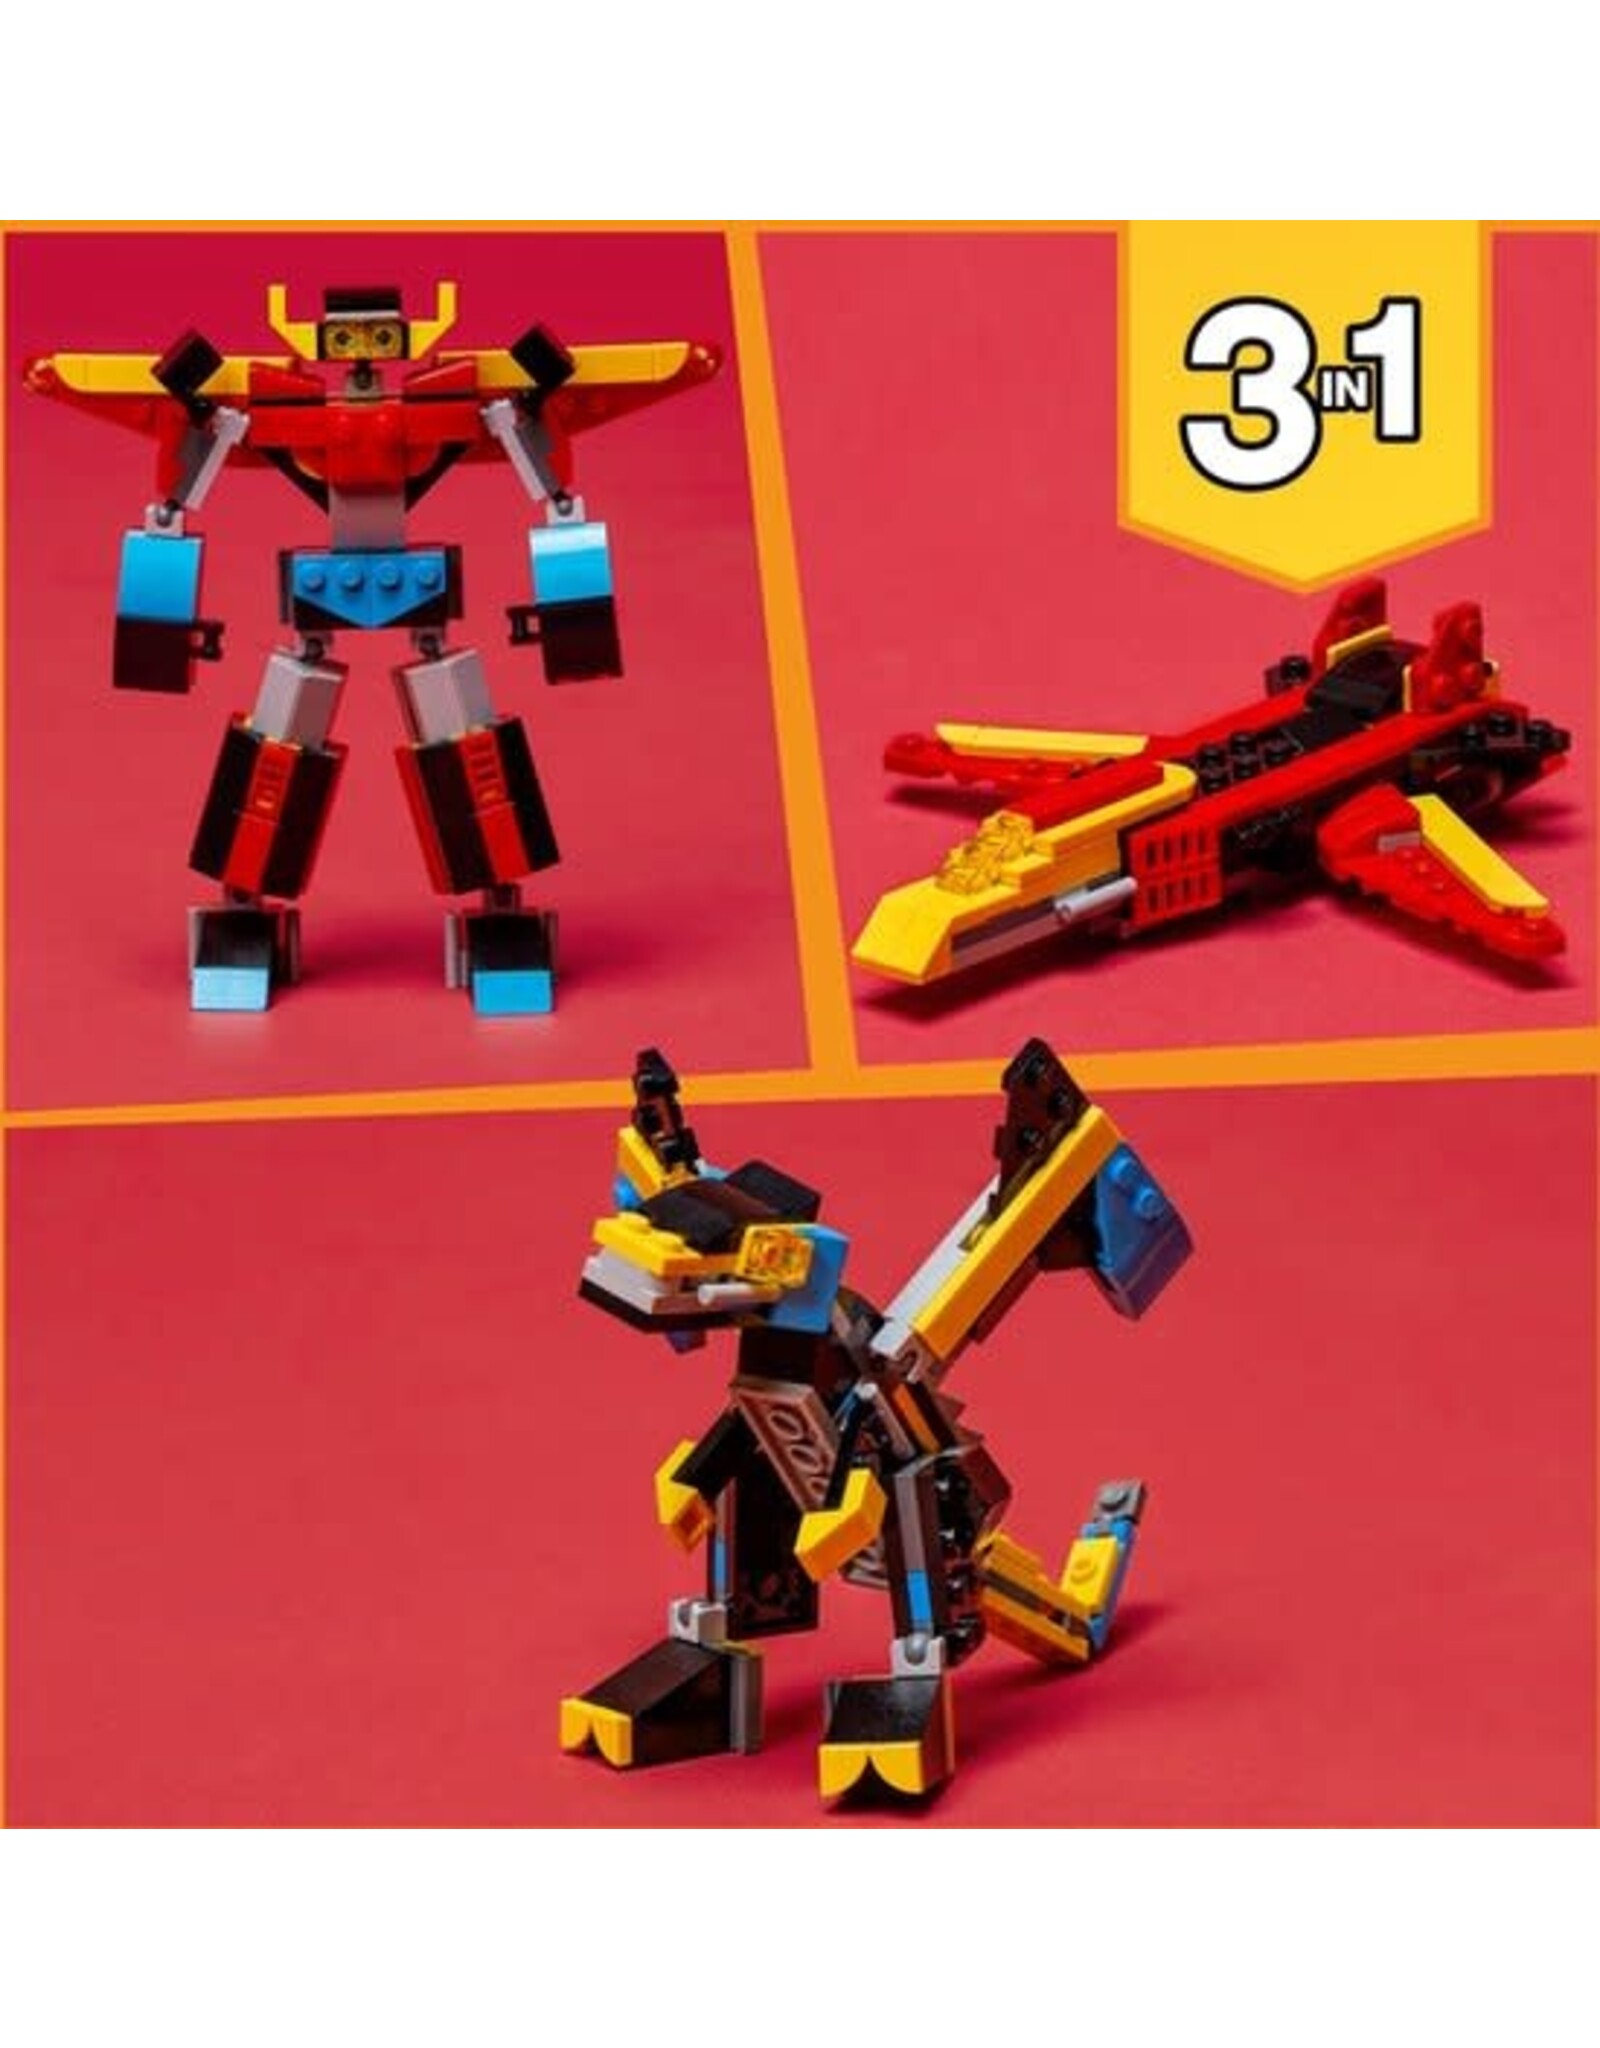 LEGO LEGO Creator Superrobot 31124